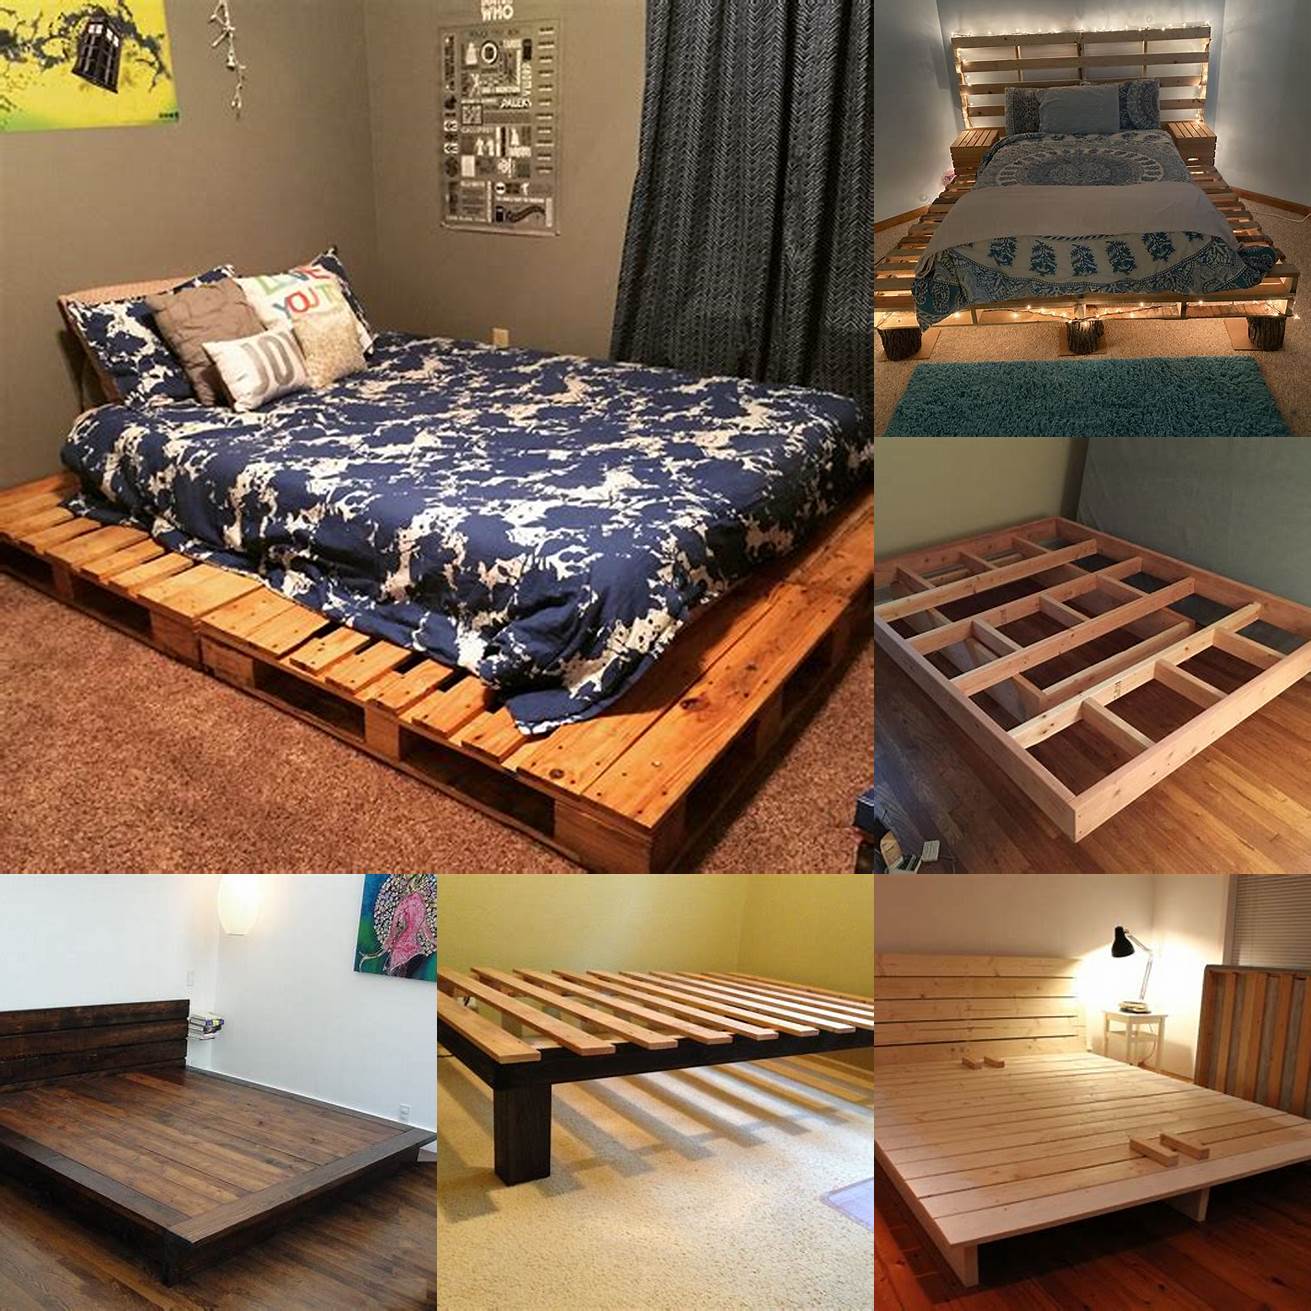 DIY bed platforms